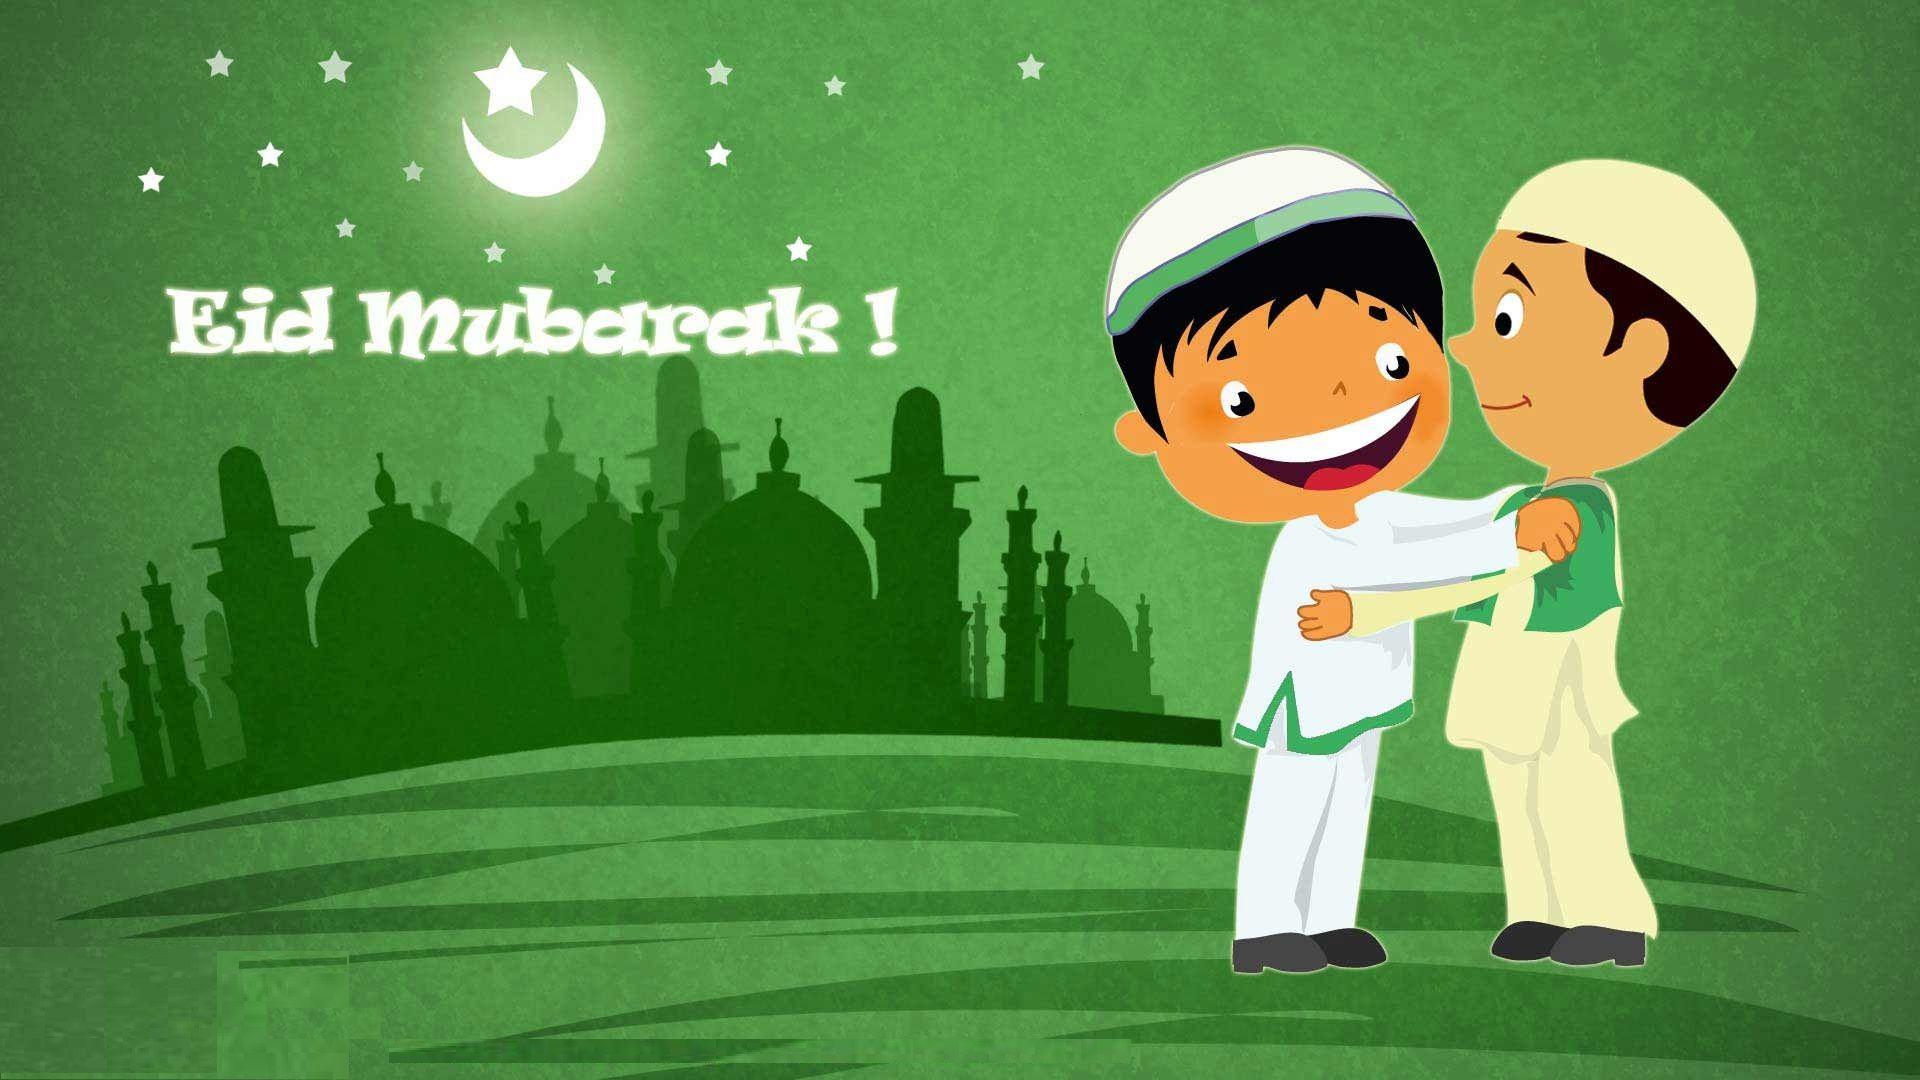 Best} Eid Mubarak HD Image, Greeting Cards, Wallpaper and Photo